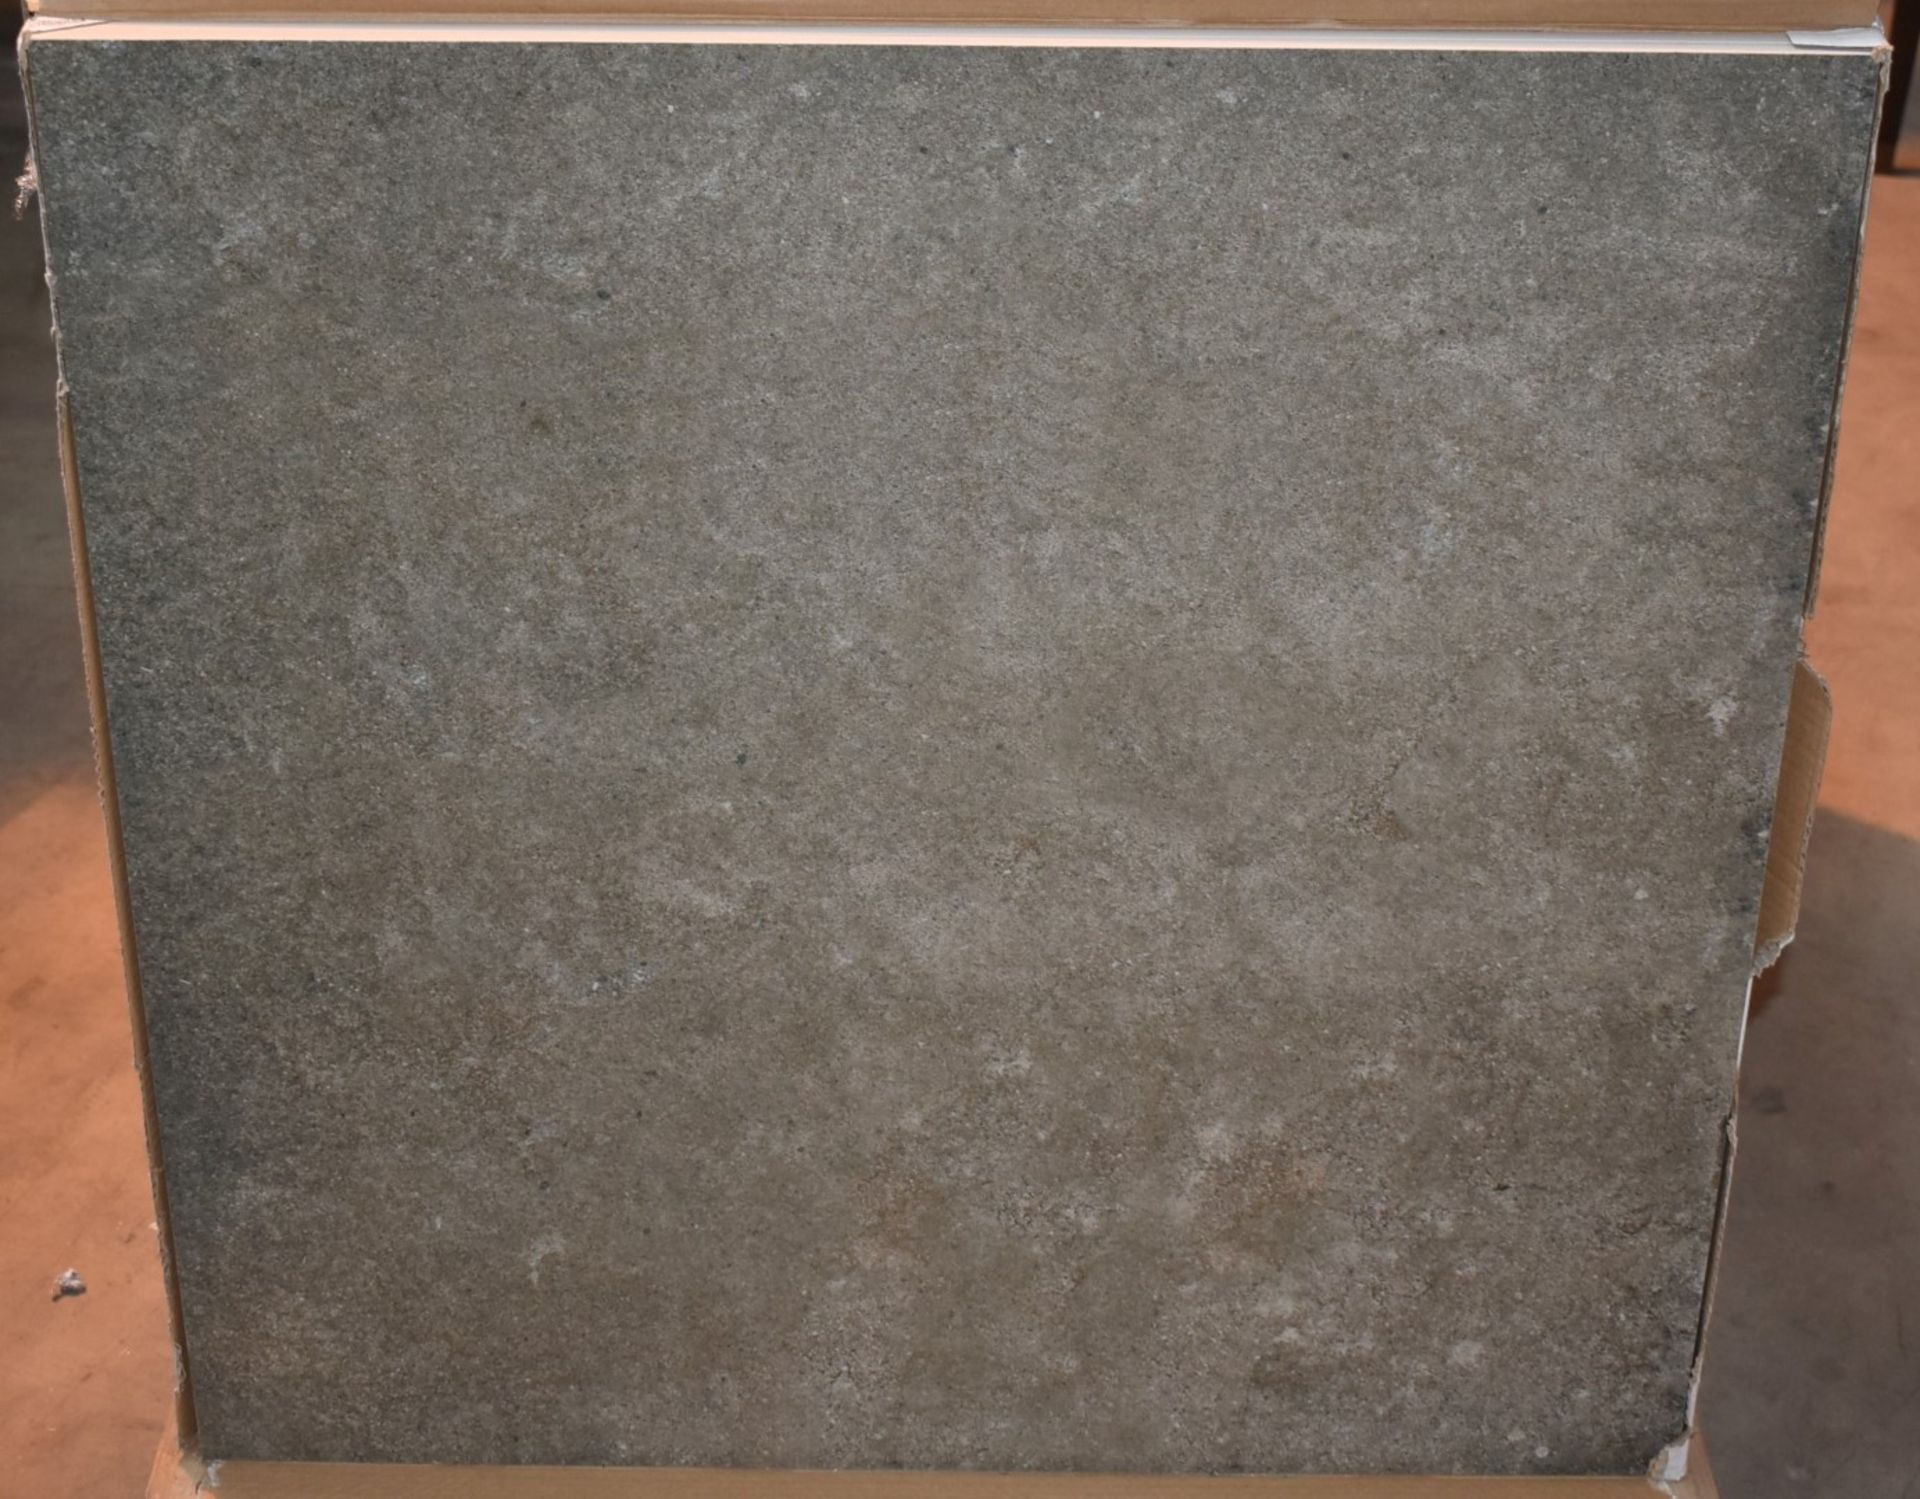 12 x Boxes of RAK Porcelain Tiles - Borgogna Stone Range - Grey Colour Gloss Finish - Size: 75x75cm - Image 5 of 6